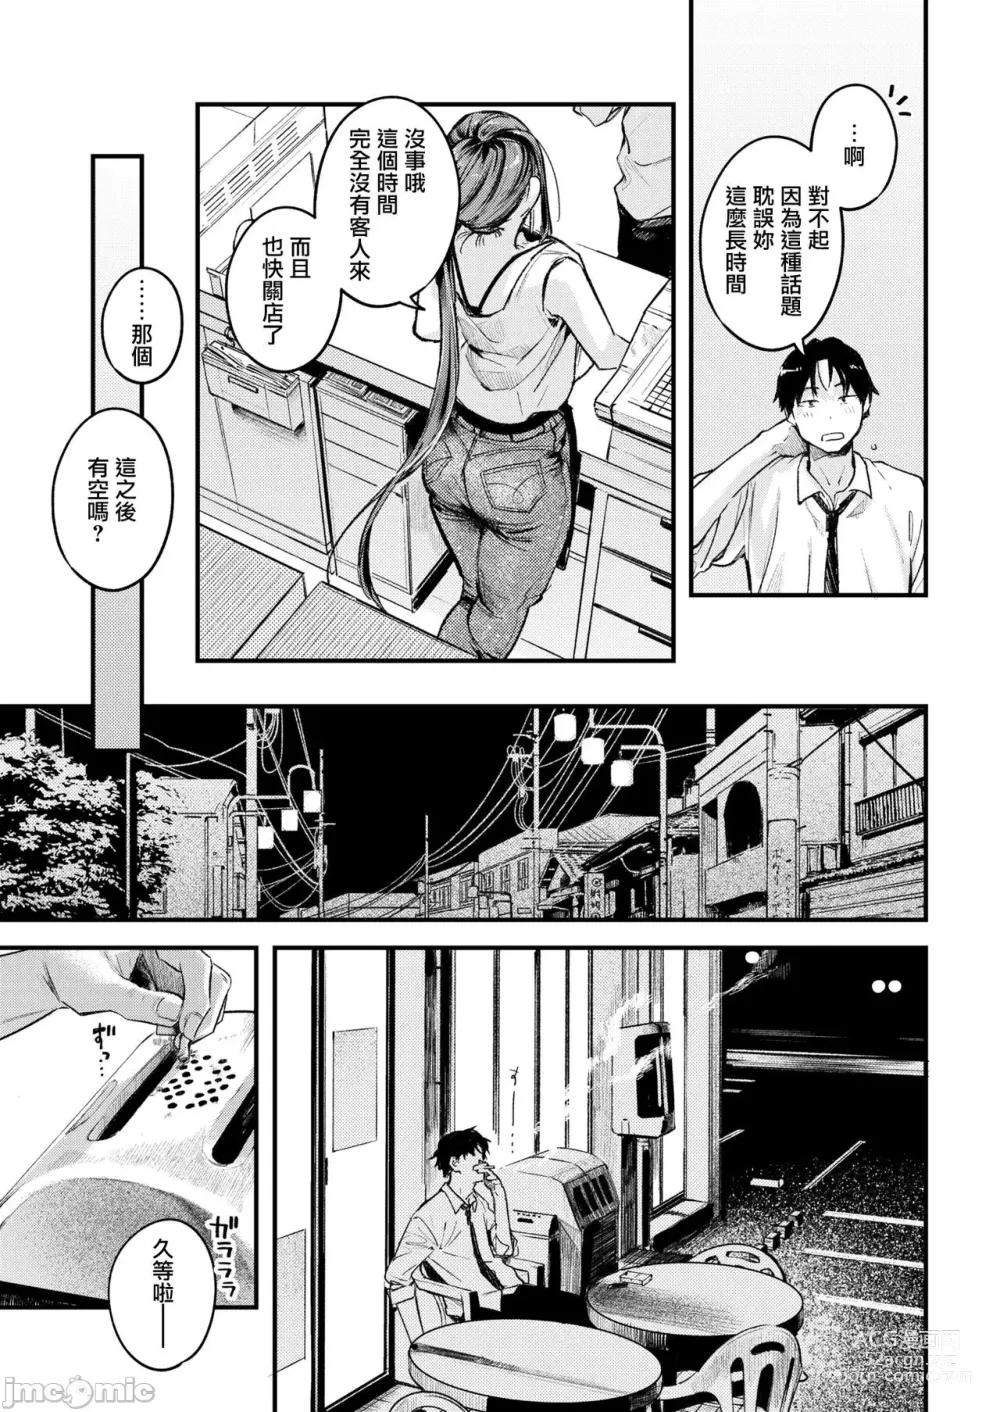 Page 5 of manga 像過去一樣